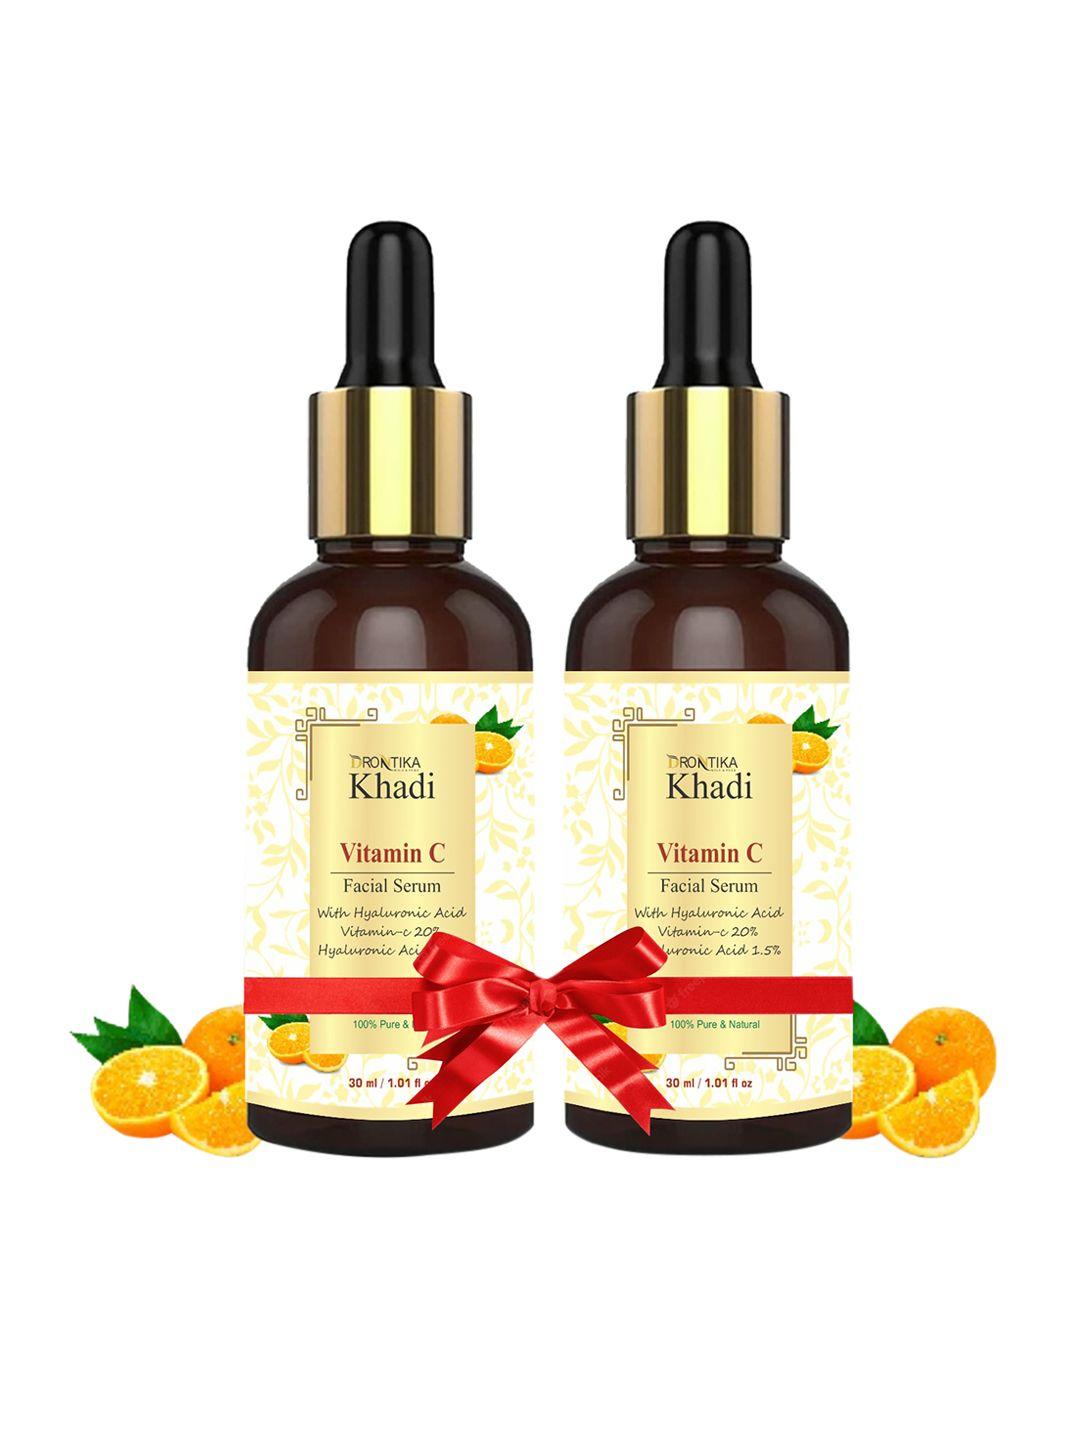 drontika set of 2 pure natural khadi vitamin c face serum with hyaluronic acid - 30ml each